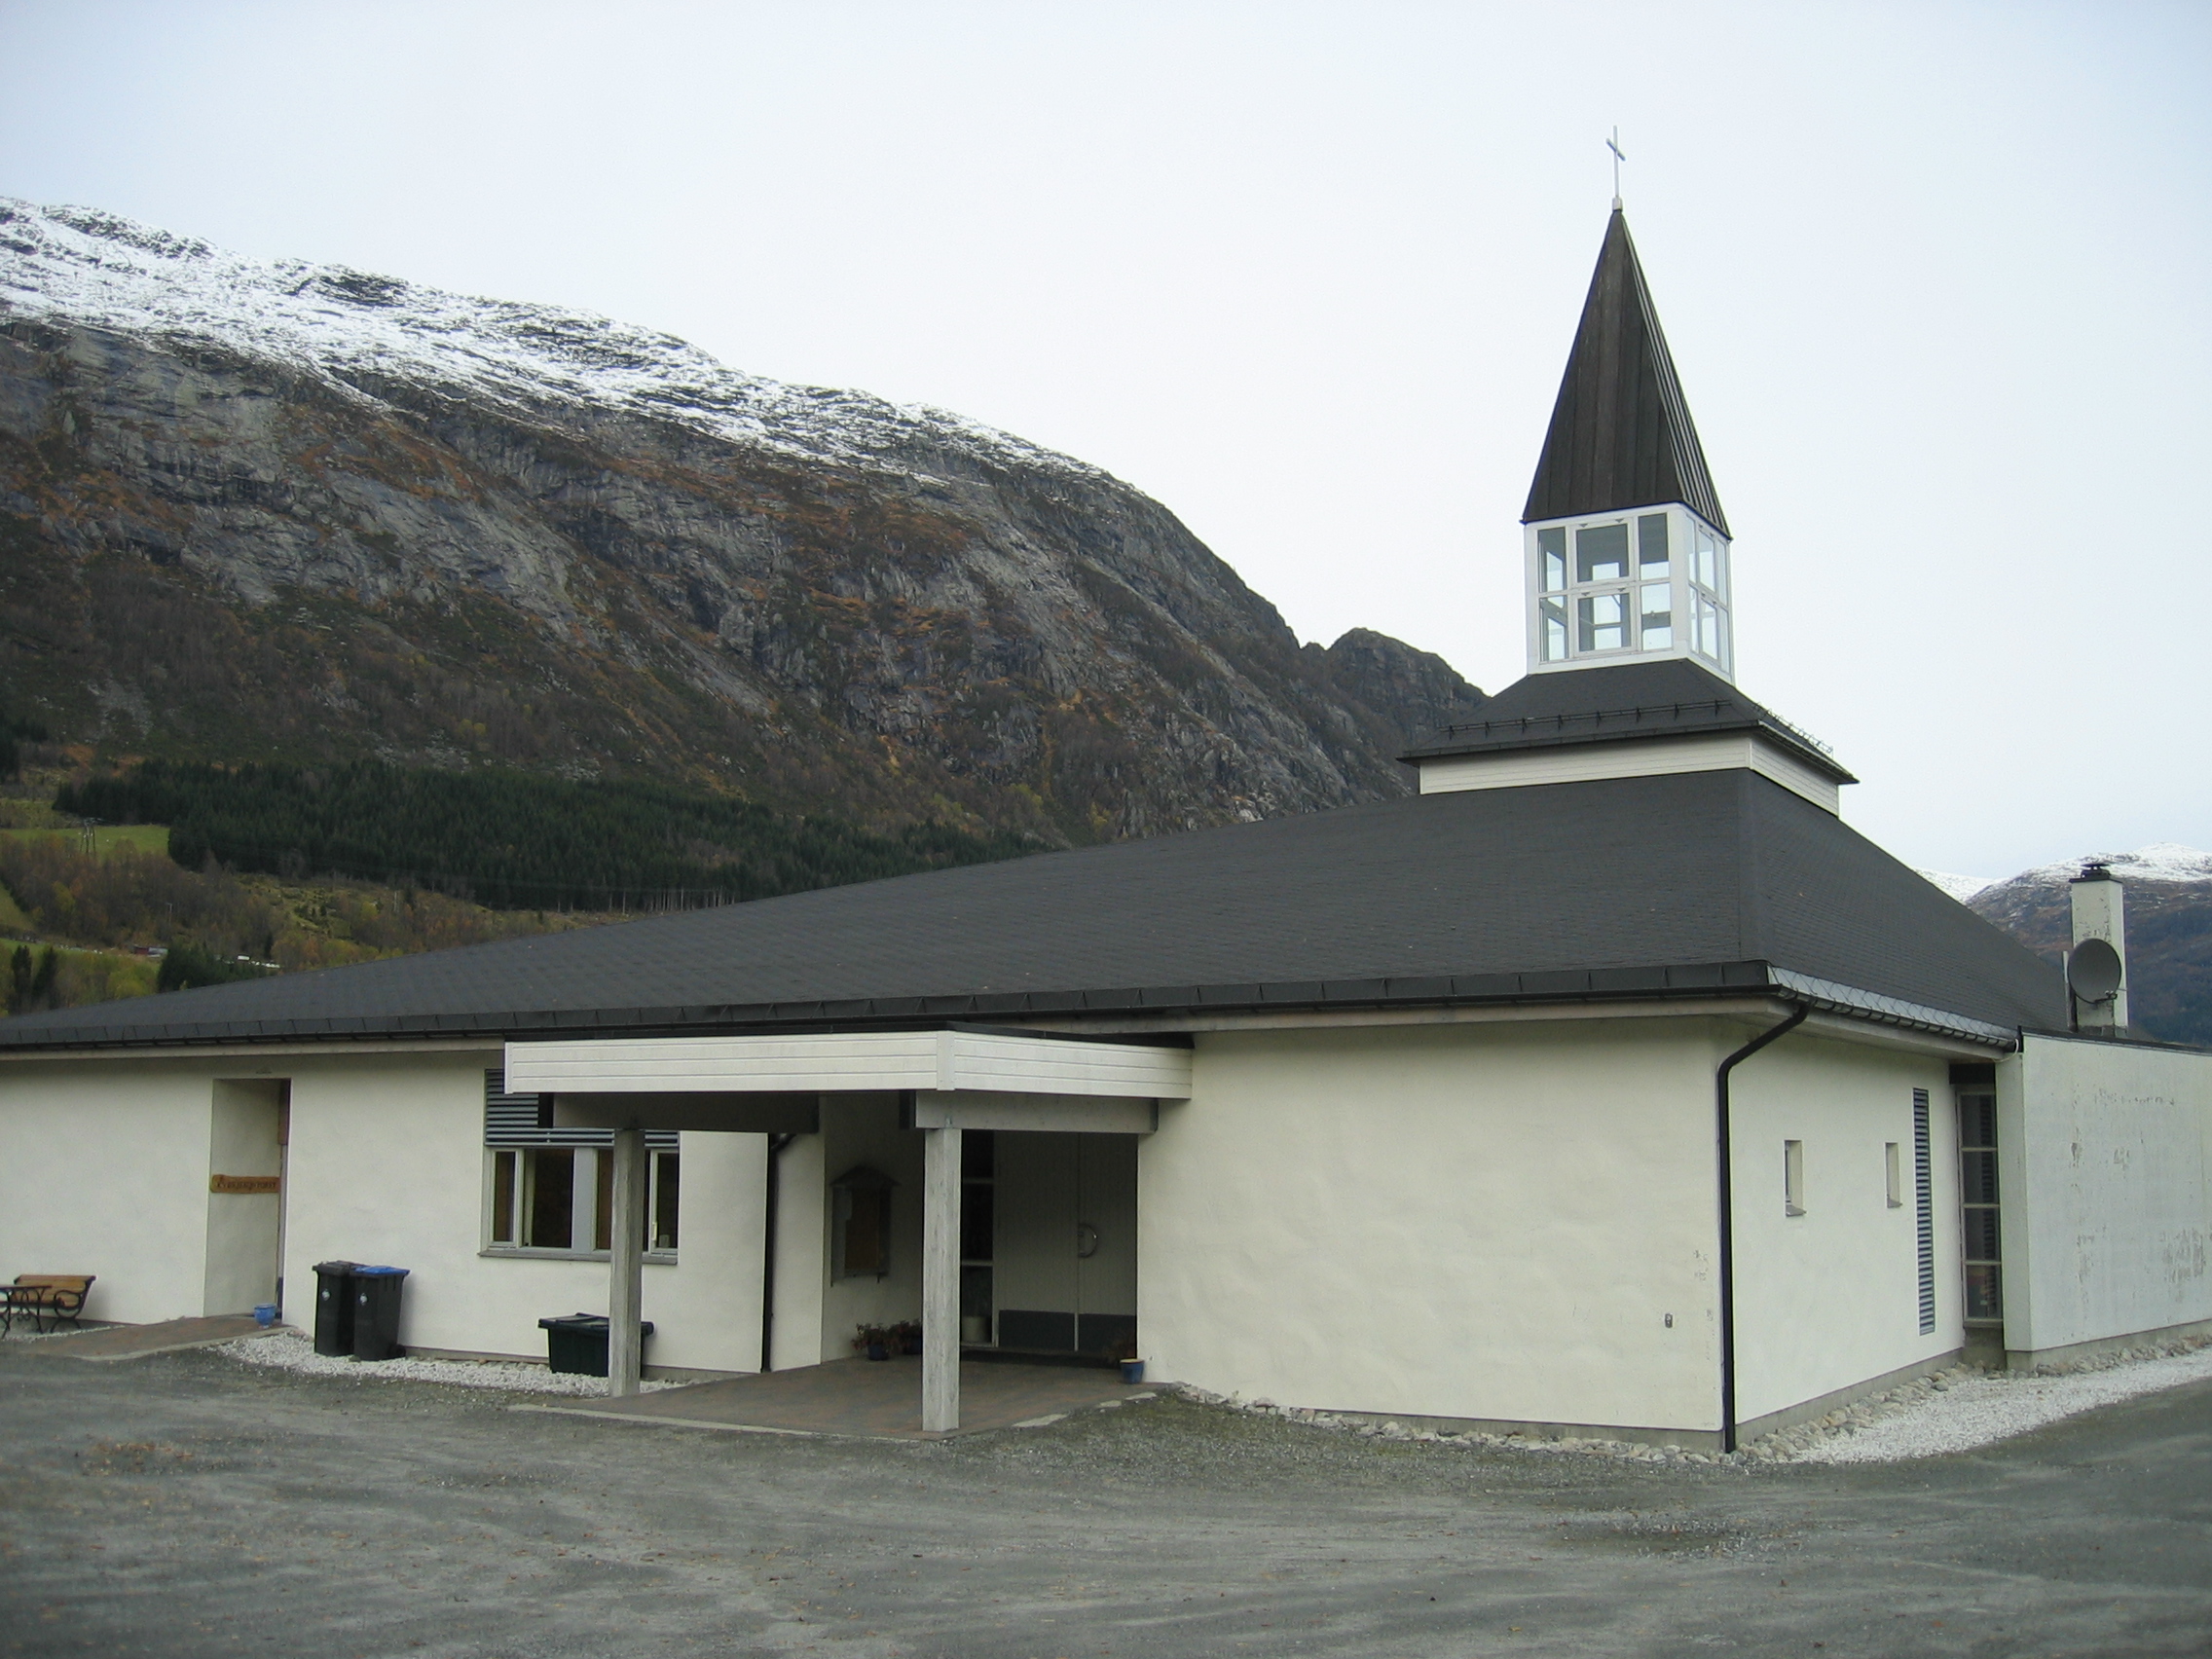 Kyrkja er bygd i lecastein som er kvitmåla. Taket er forma som ein skeiv pyramide med eit tårn over austenden.